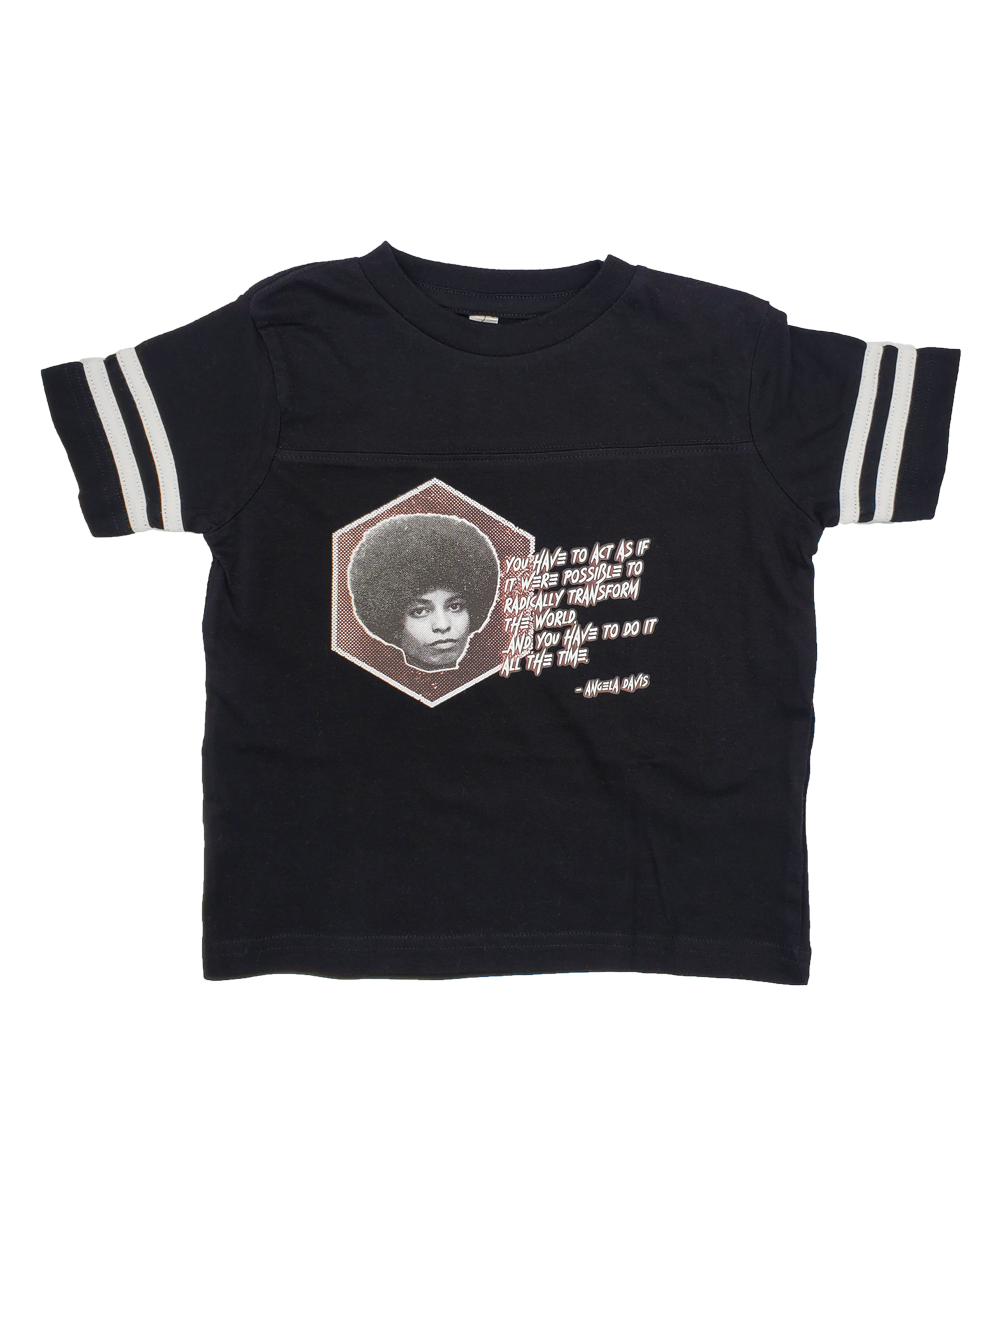 Angela Davis - Radical Transform Quote - Toddler Football T-Shirt